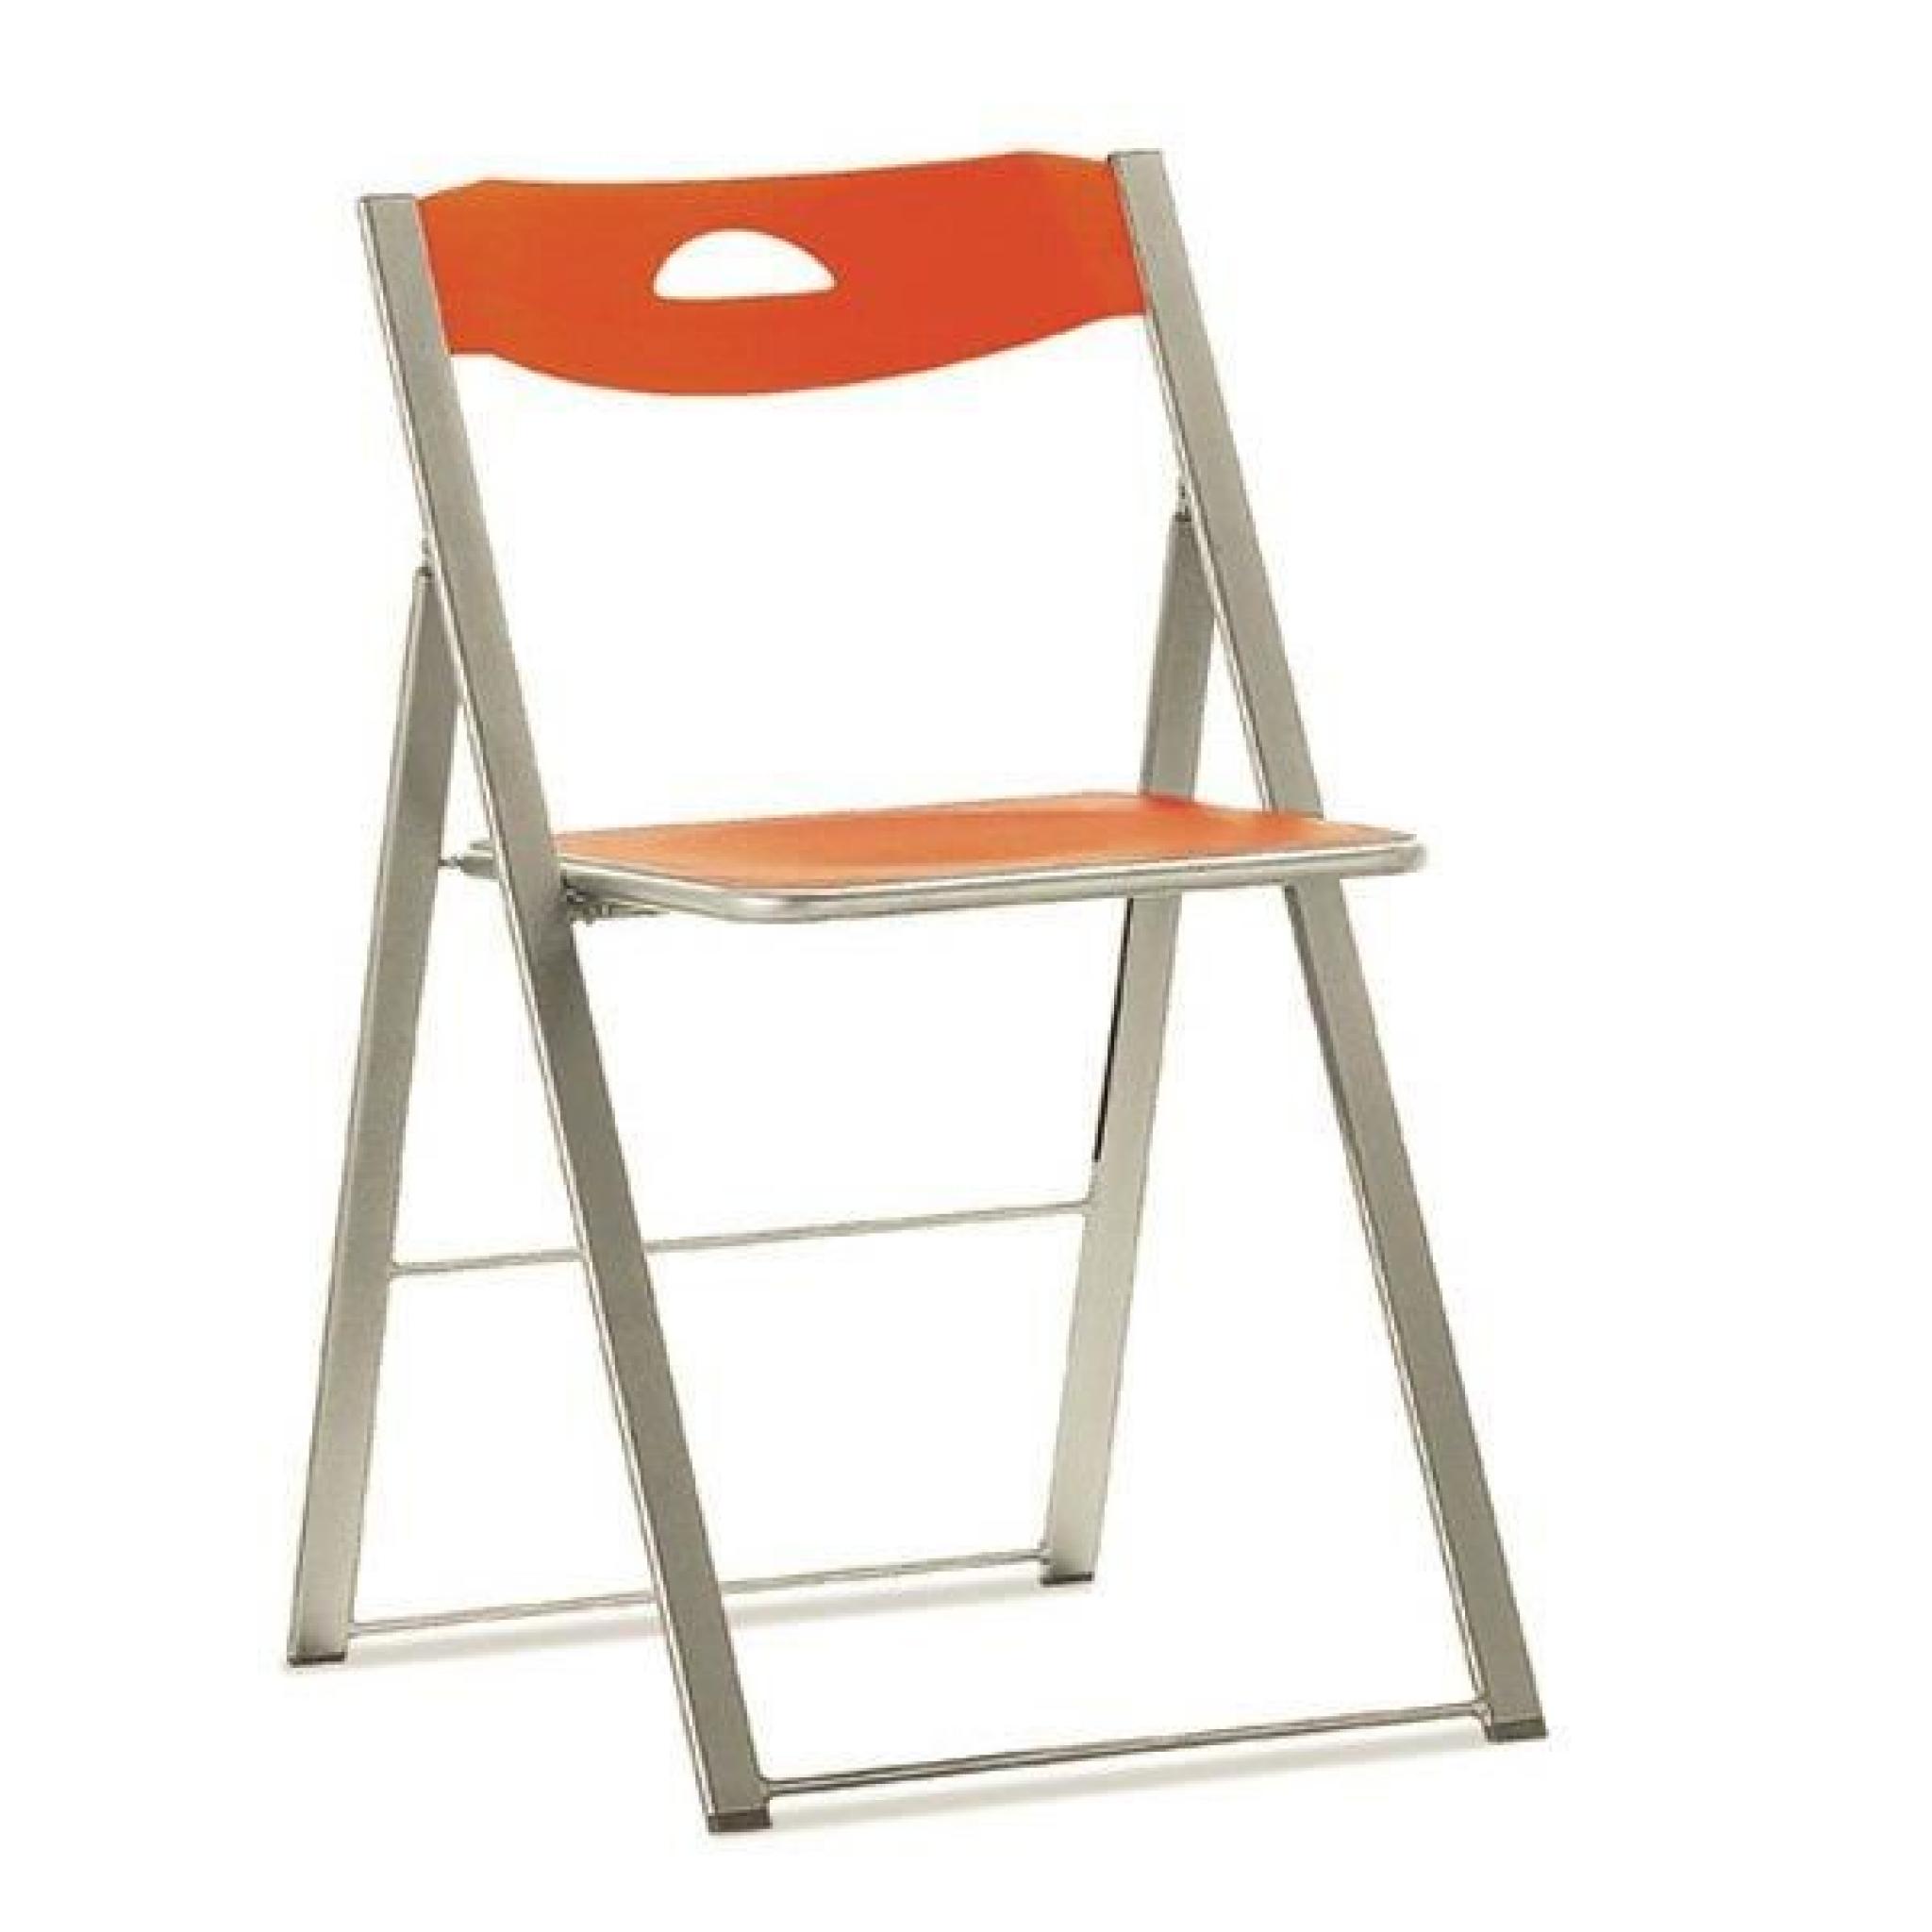 Chaise pliante ICON orange.